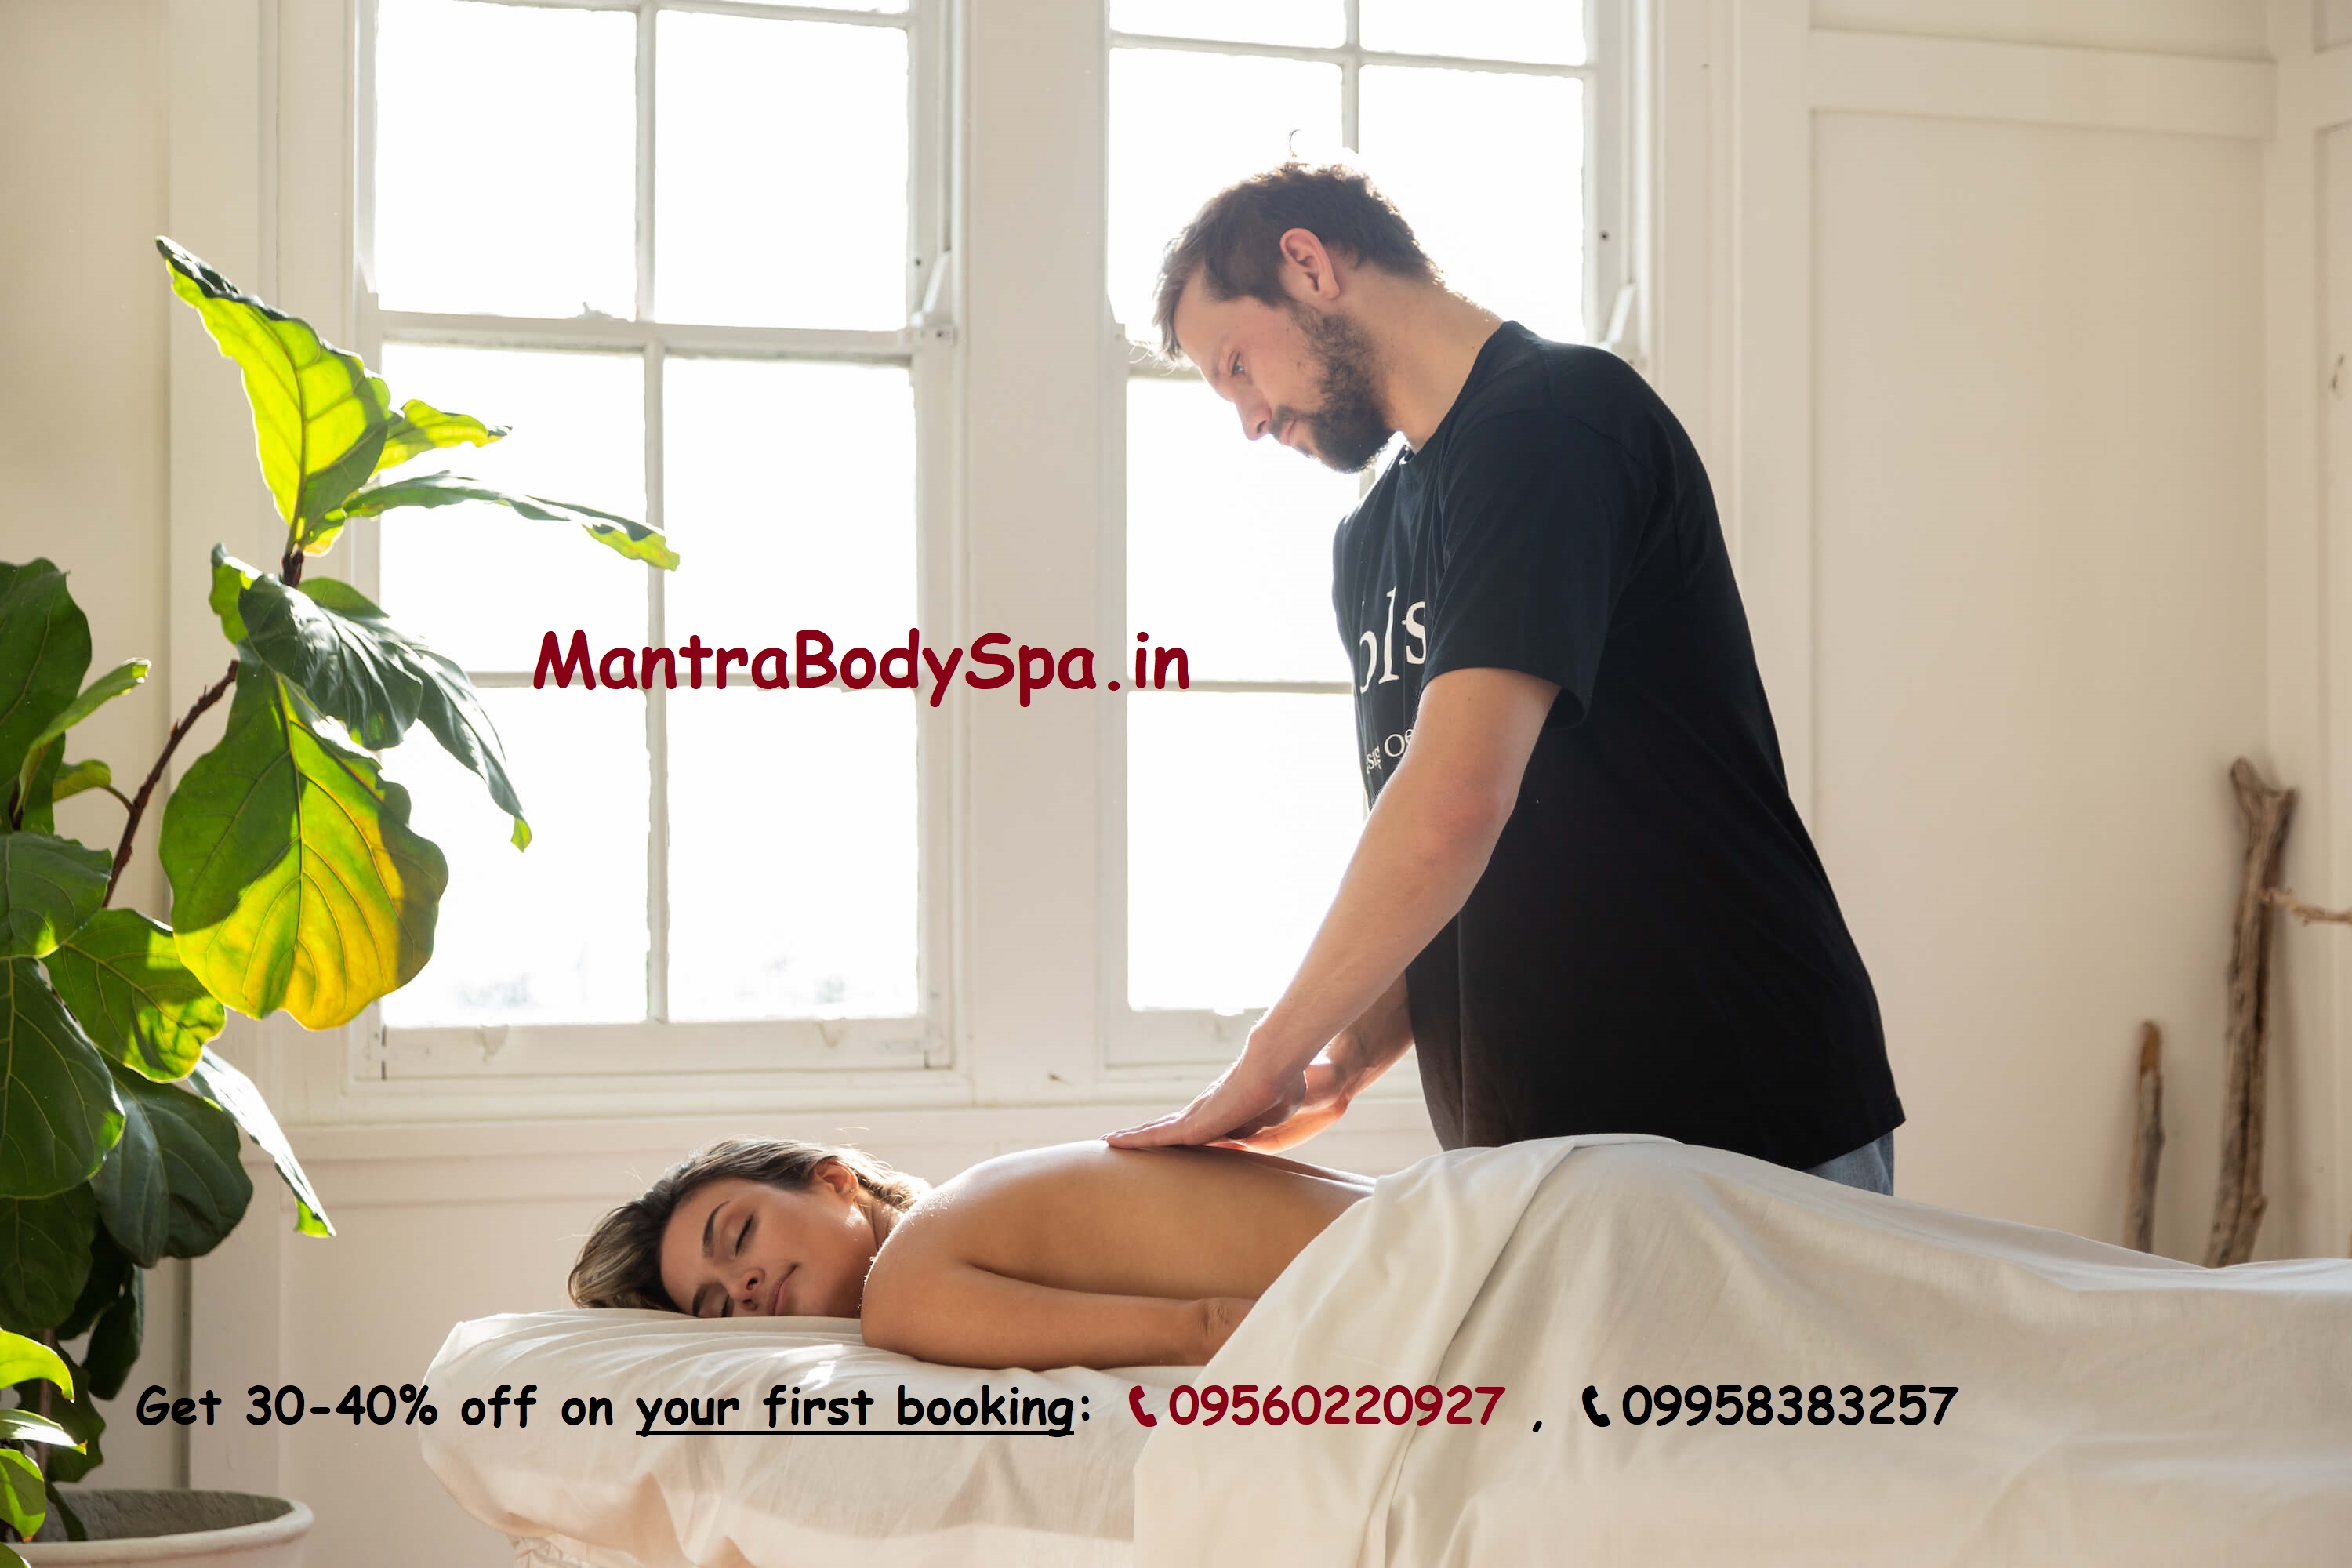 Happy Ending Massage Service in Delhi NCR & Gurgaon, South Delhi, Delhi, India